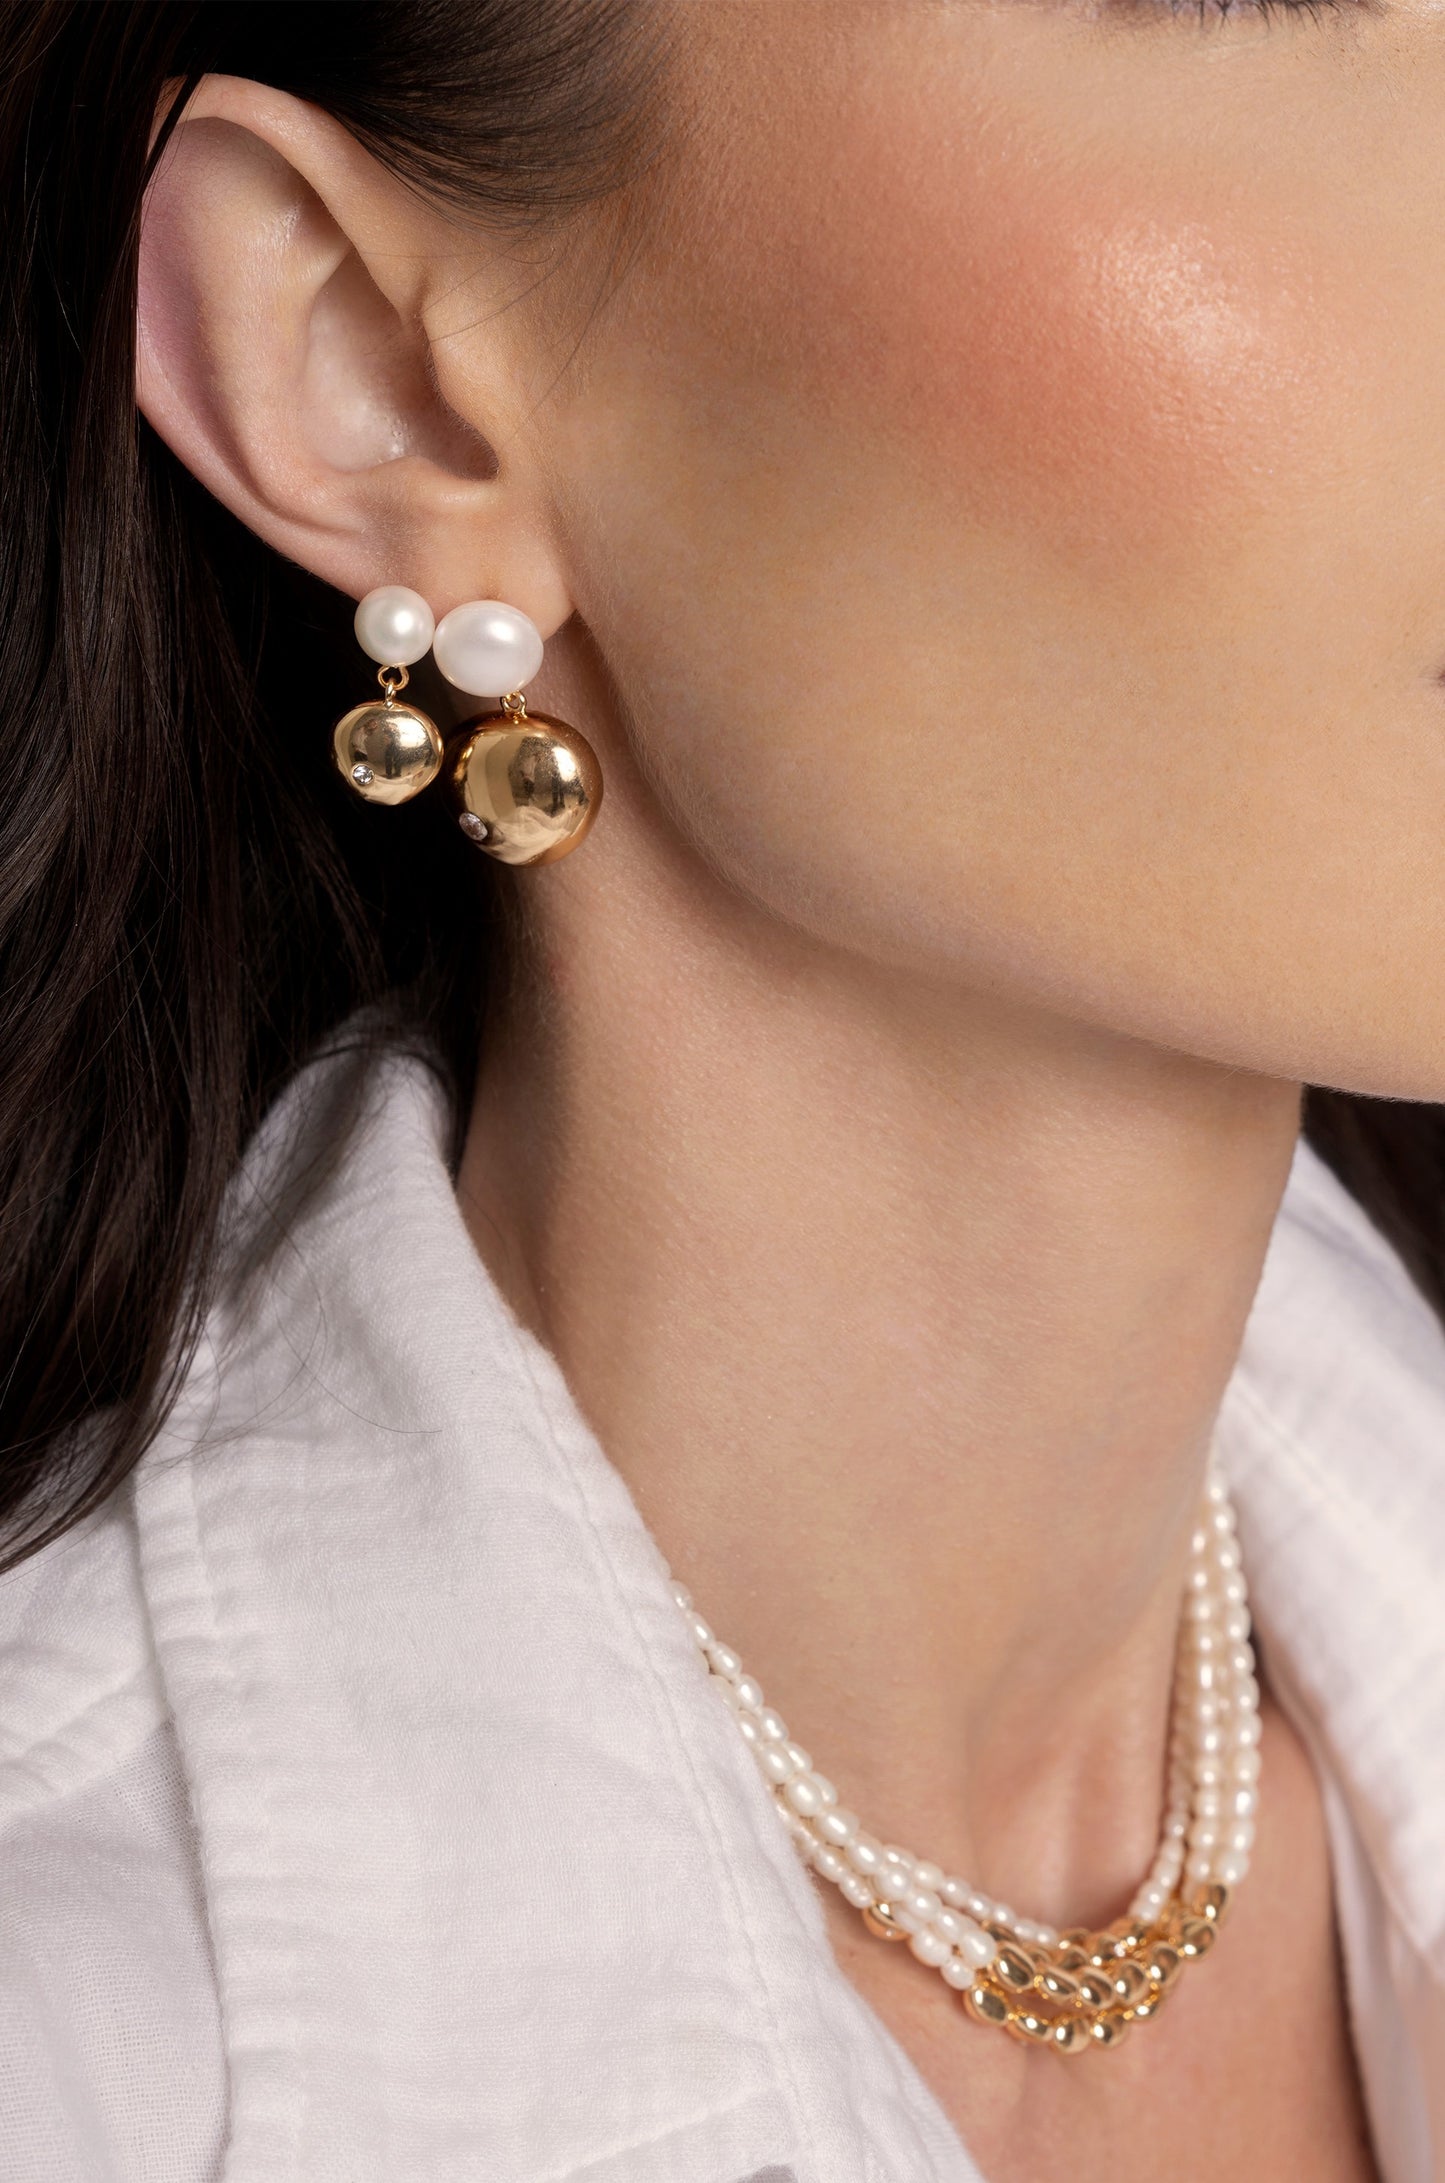 Small Pebble and Pearl Dangle Earrings